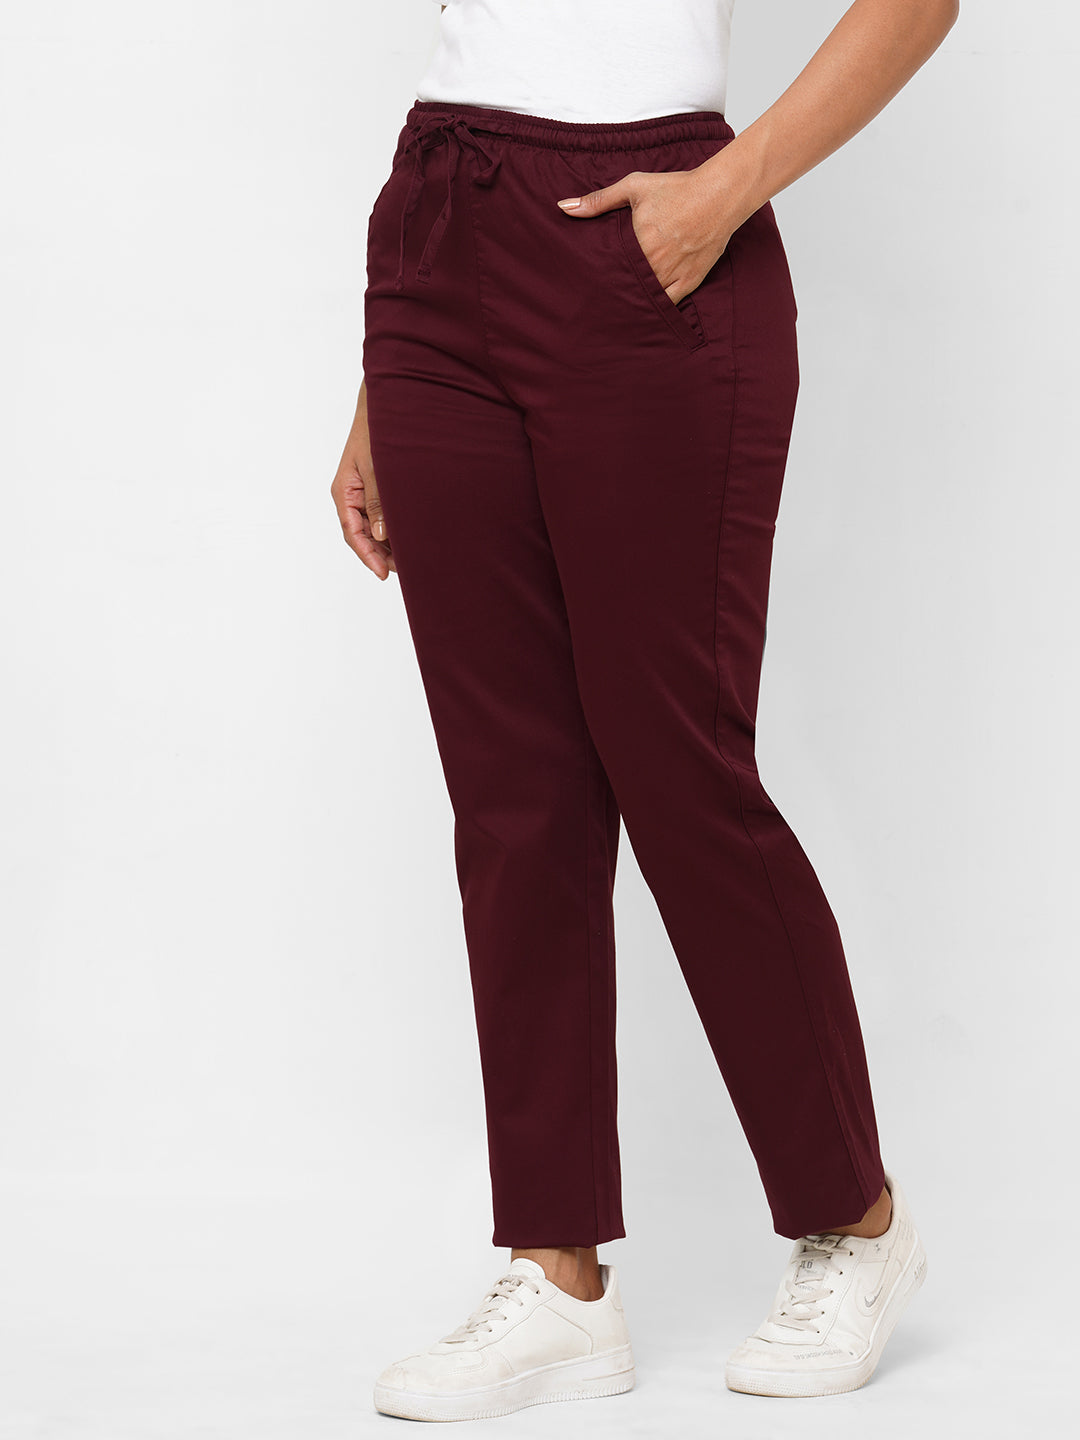 Women's Maroon/Red Cotton Lycra Regular Fit Pant